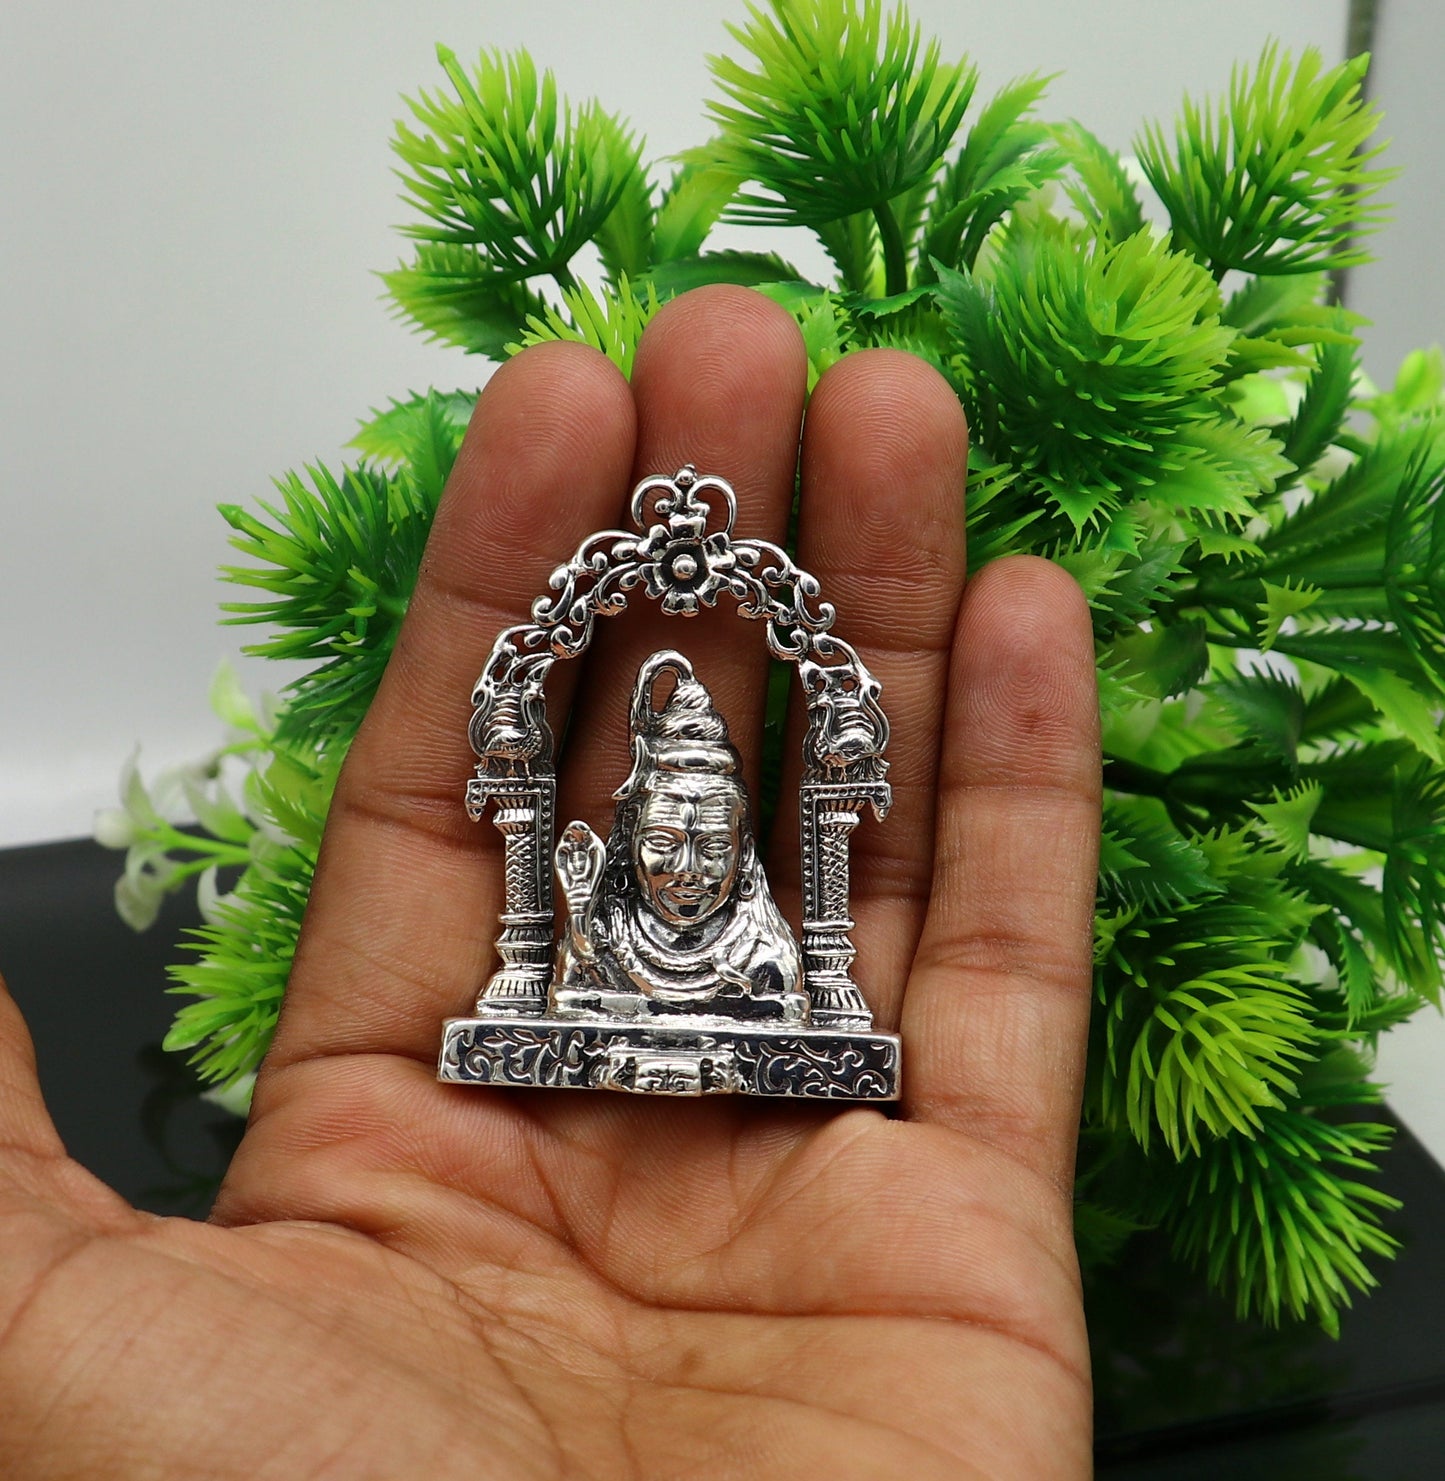 925 Sterling silver handmade antique look Indian Hindu idols Lord Shiva stunning statue figurine, puja articles best decorative gift art11 - TRIBAL ORNAMENTS